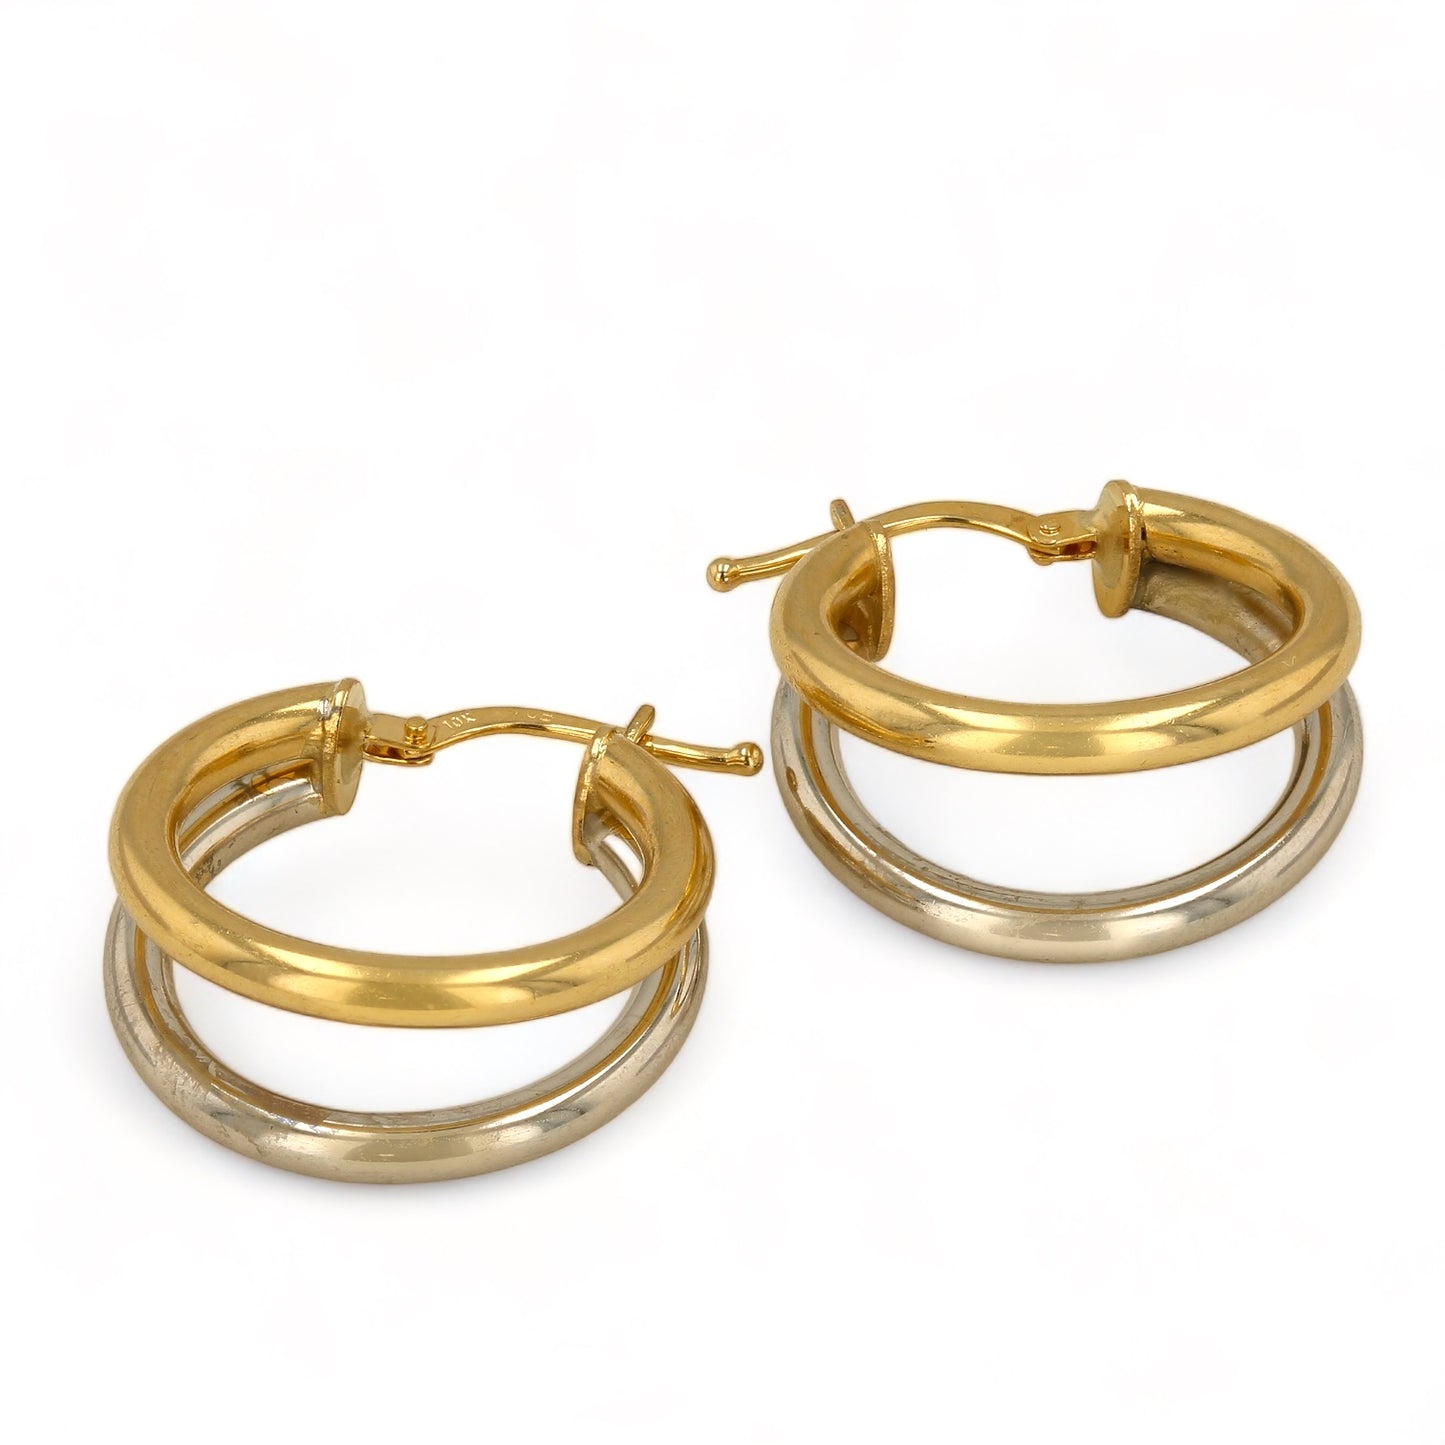 10k two color double hoops earrings Italian handcrafted-227046